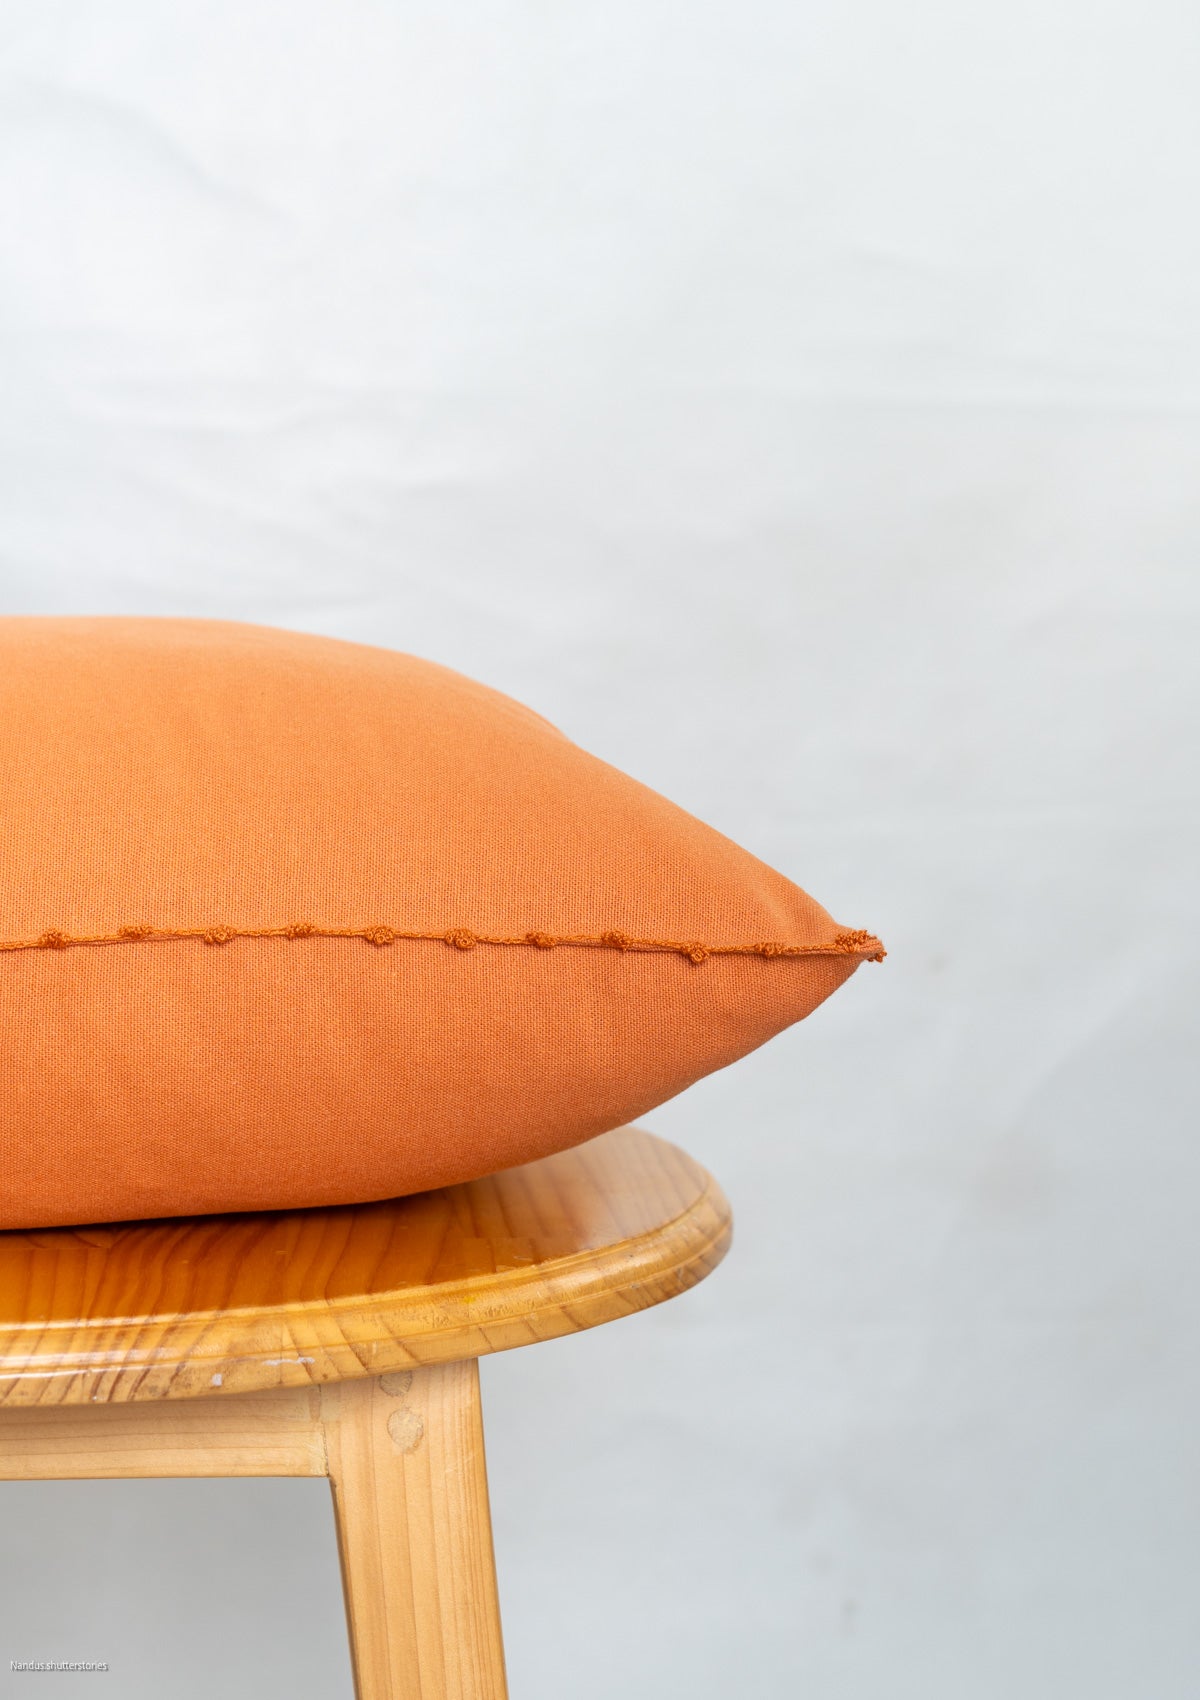 Solid orange 100% cotton plain cushion cover for sofa